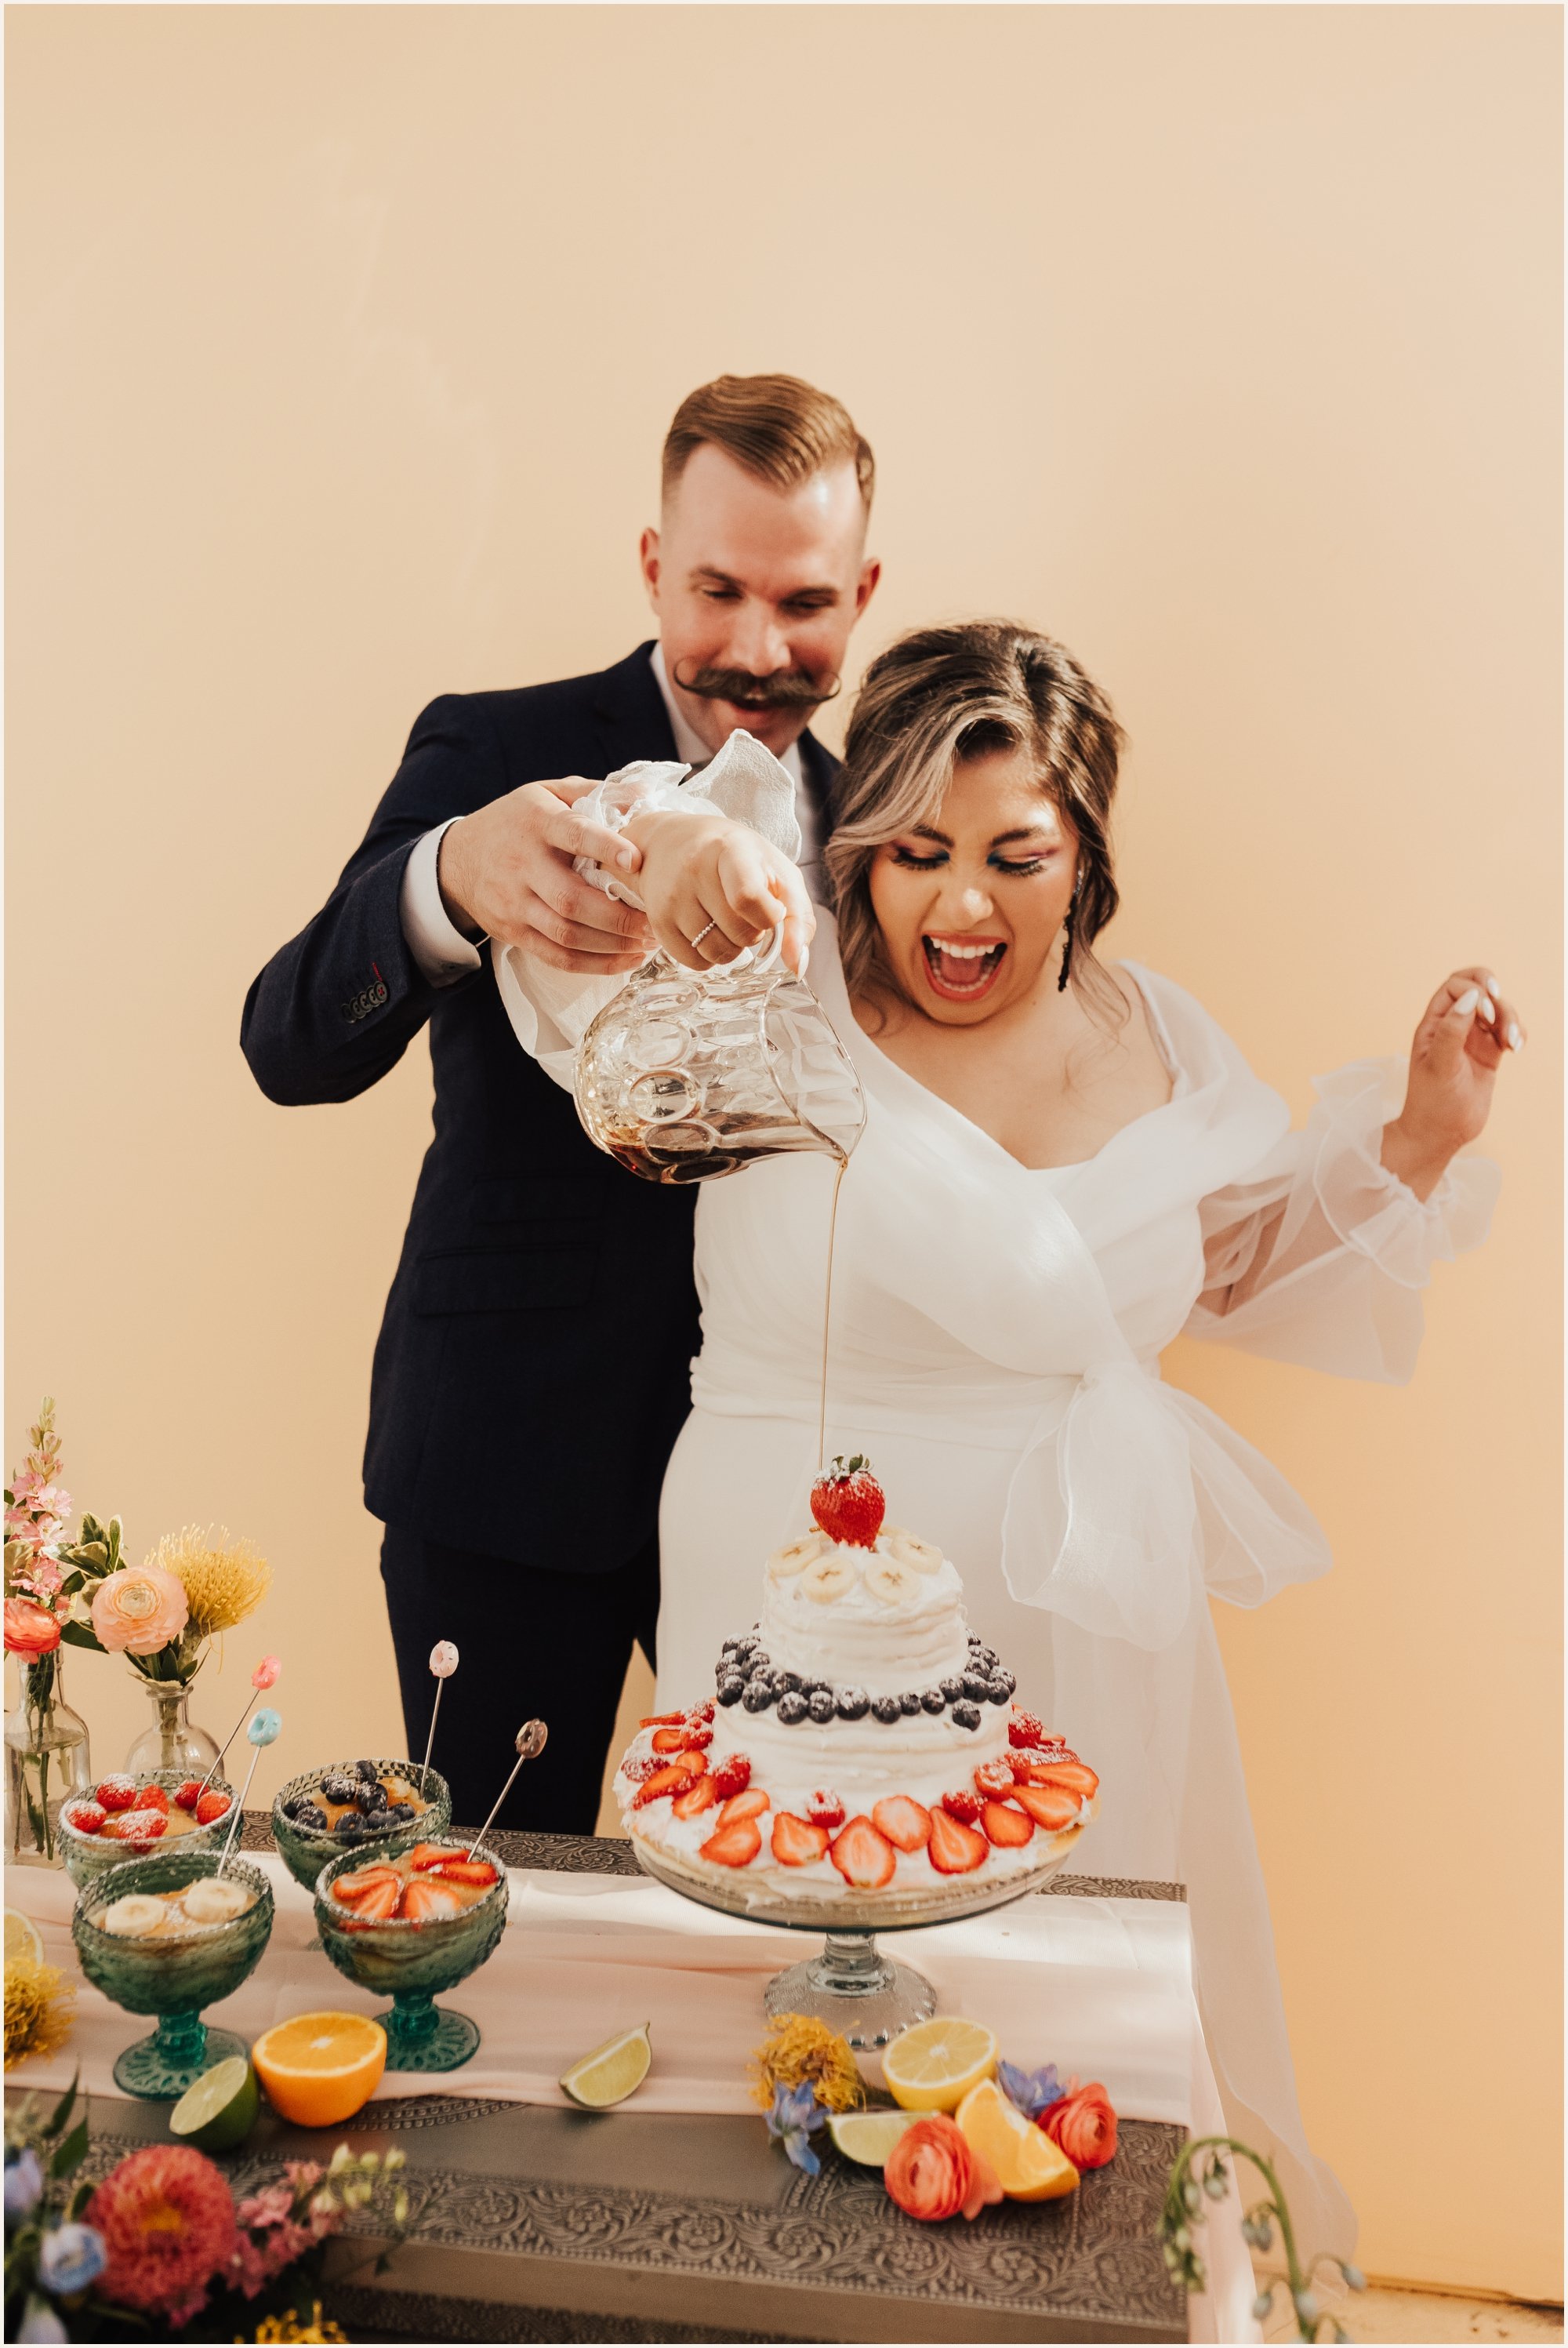 Colorful Pancake Dessert Wedding Styled Shoot | Lauren Parr Photography | Austin Based Wedding Photographer